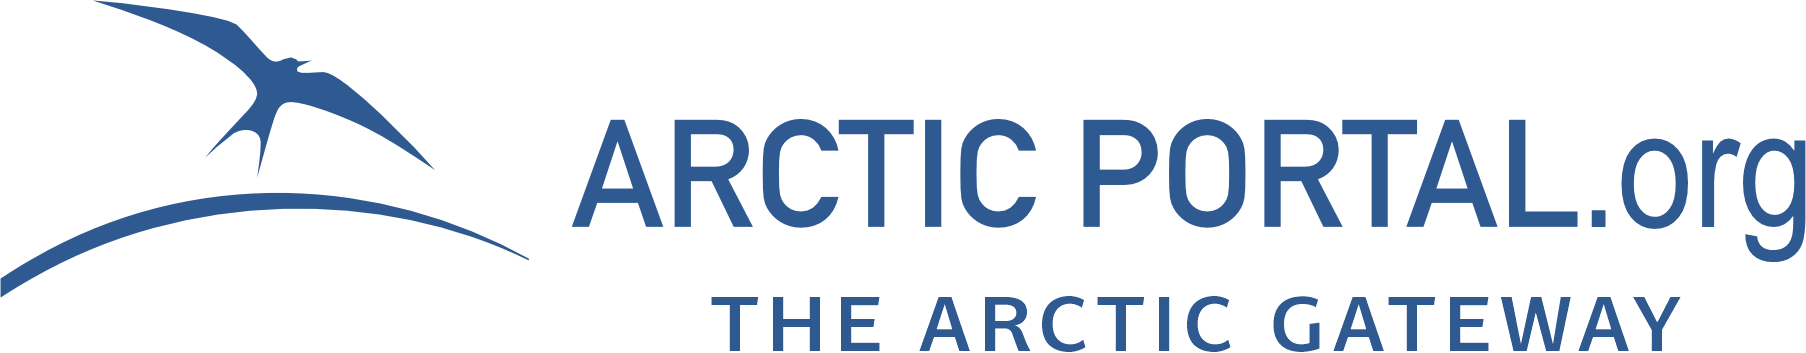 Arctic Portal horizontal transparent